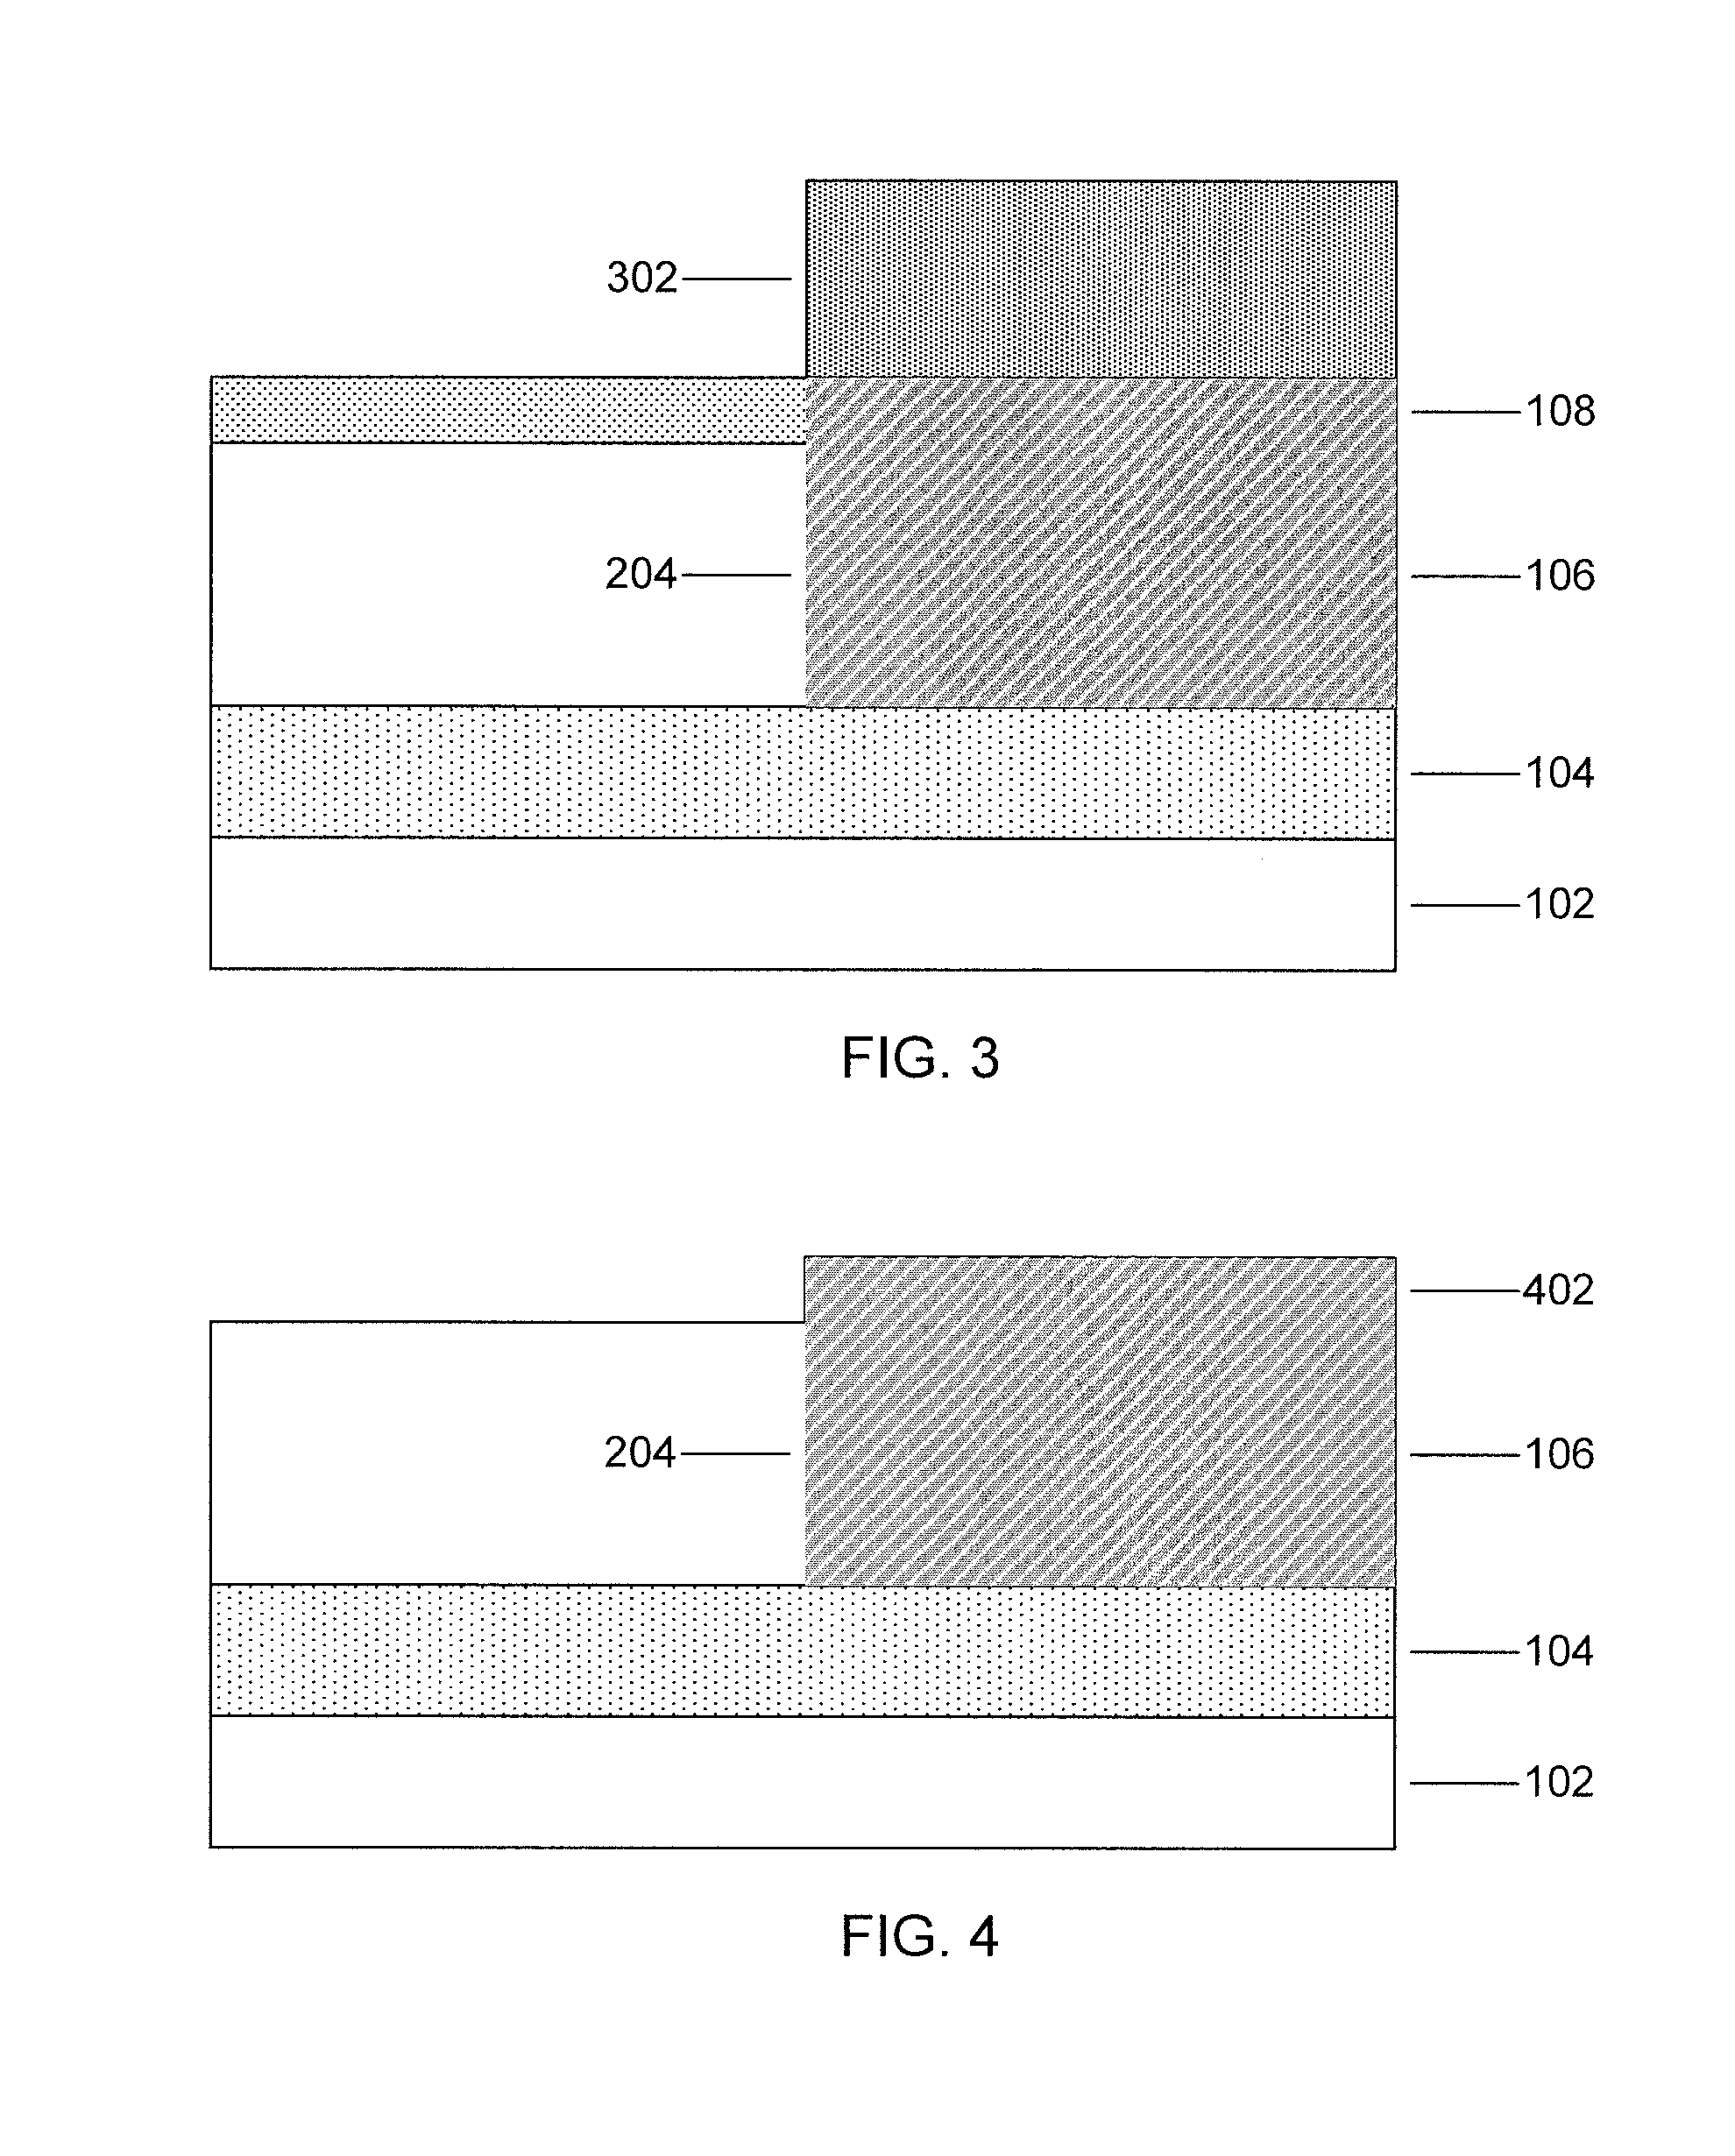 MOS capacitors with a finfet process